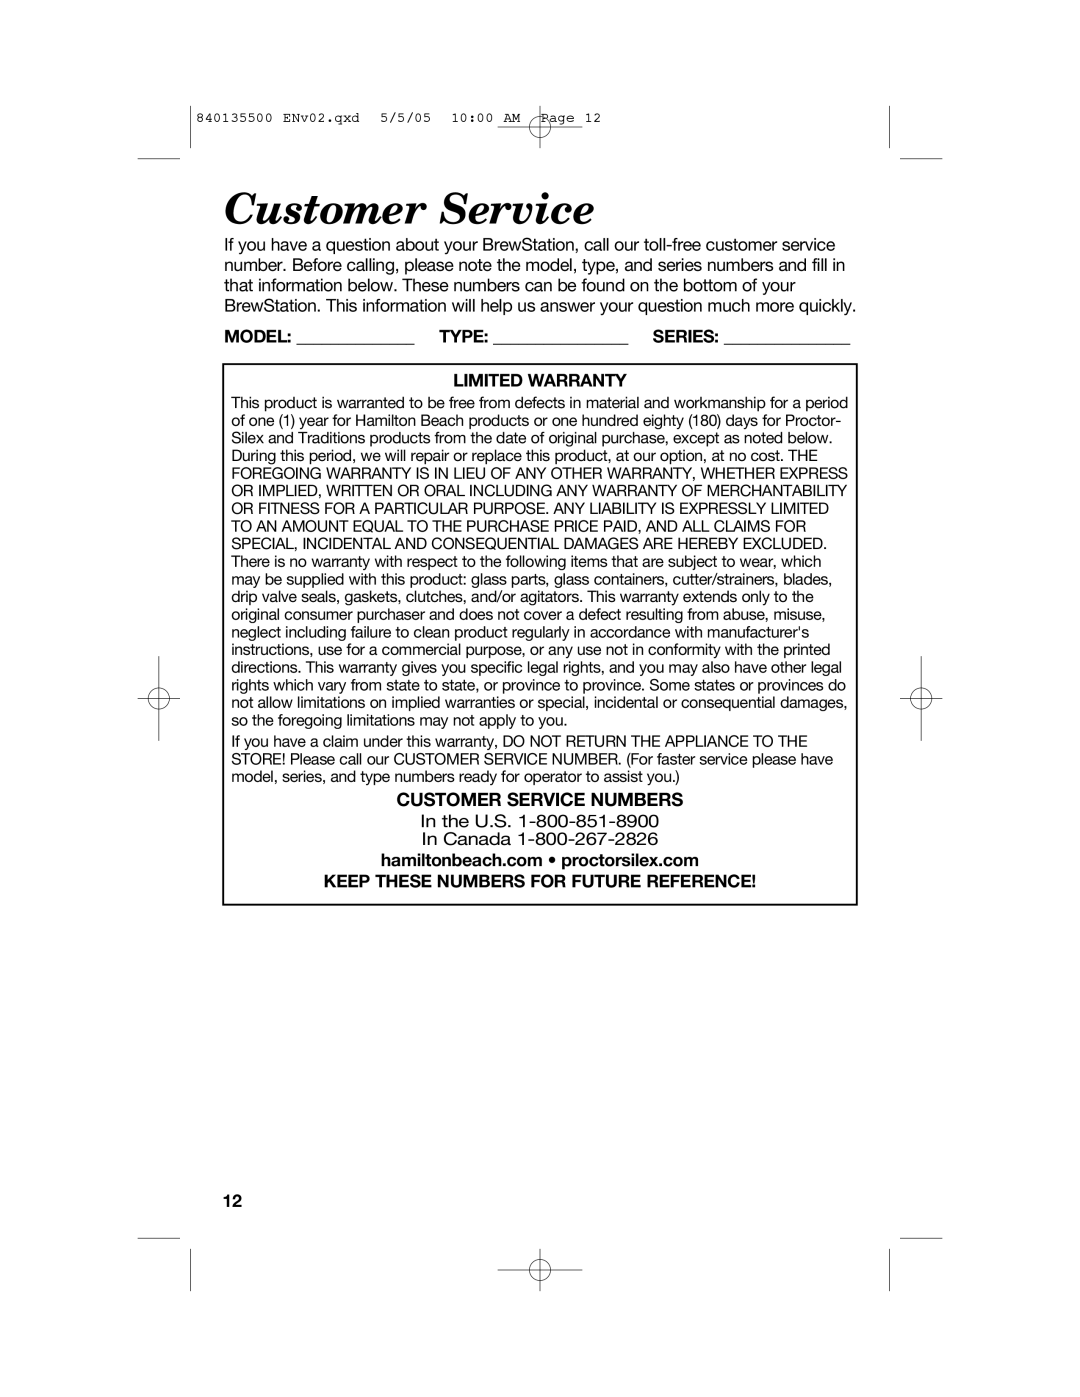 Hamilton Beach 47451 manual Customer Service Numbers, Model Type Series Limited Warranty 